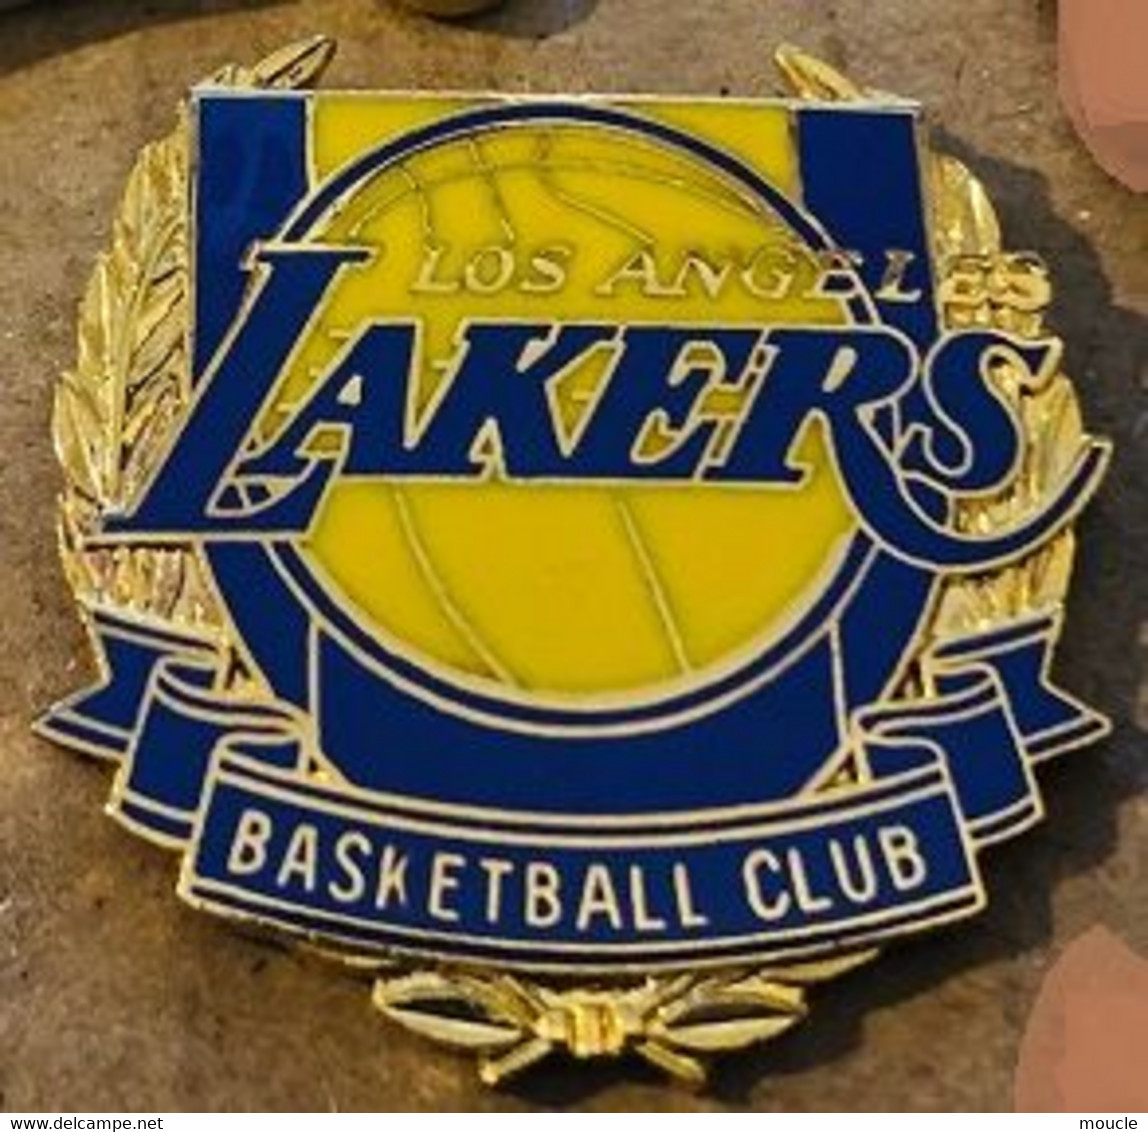 LOS ANGELES LAKERS - BASKEBALL CLUB - USA - ETATS UNIS D'AMERIQUE - NBA - UNITED STATES - LAURIERS - BALLON -    (14) - Basketball